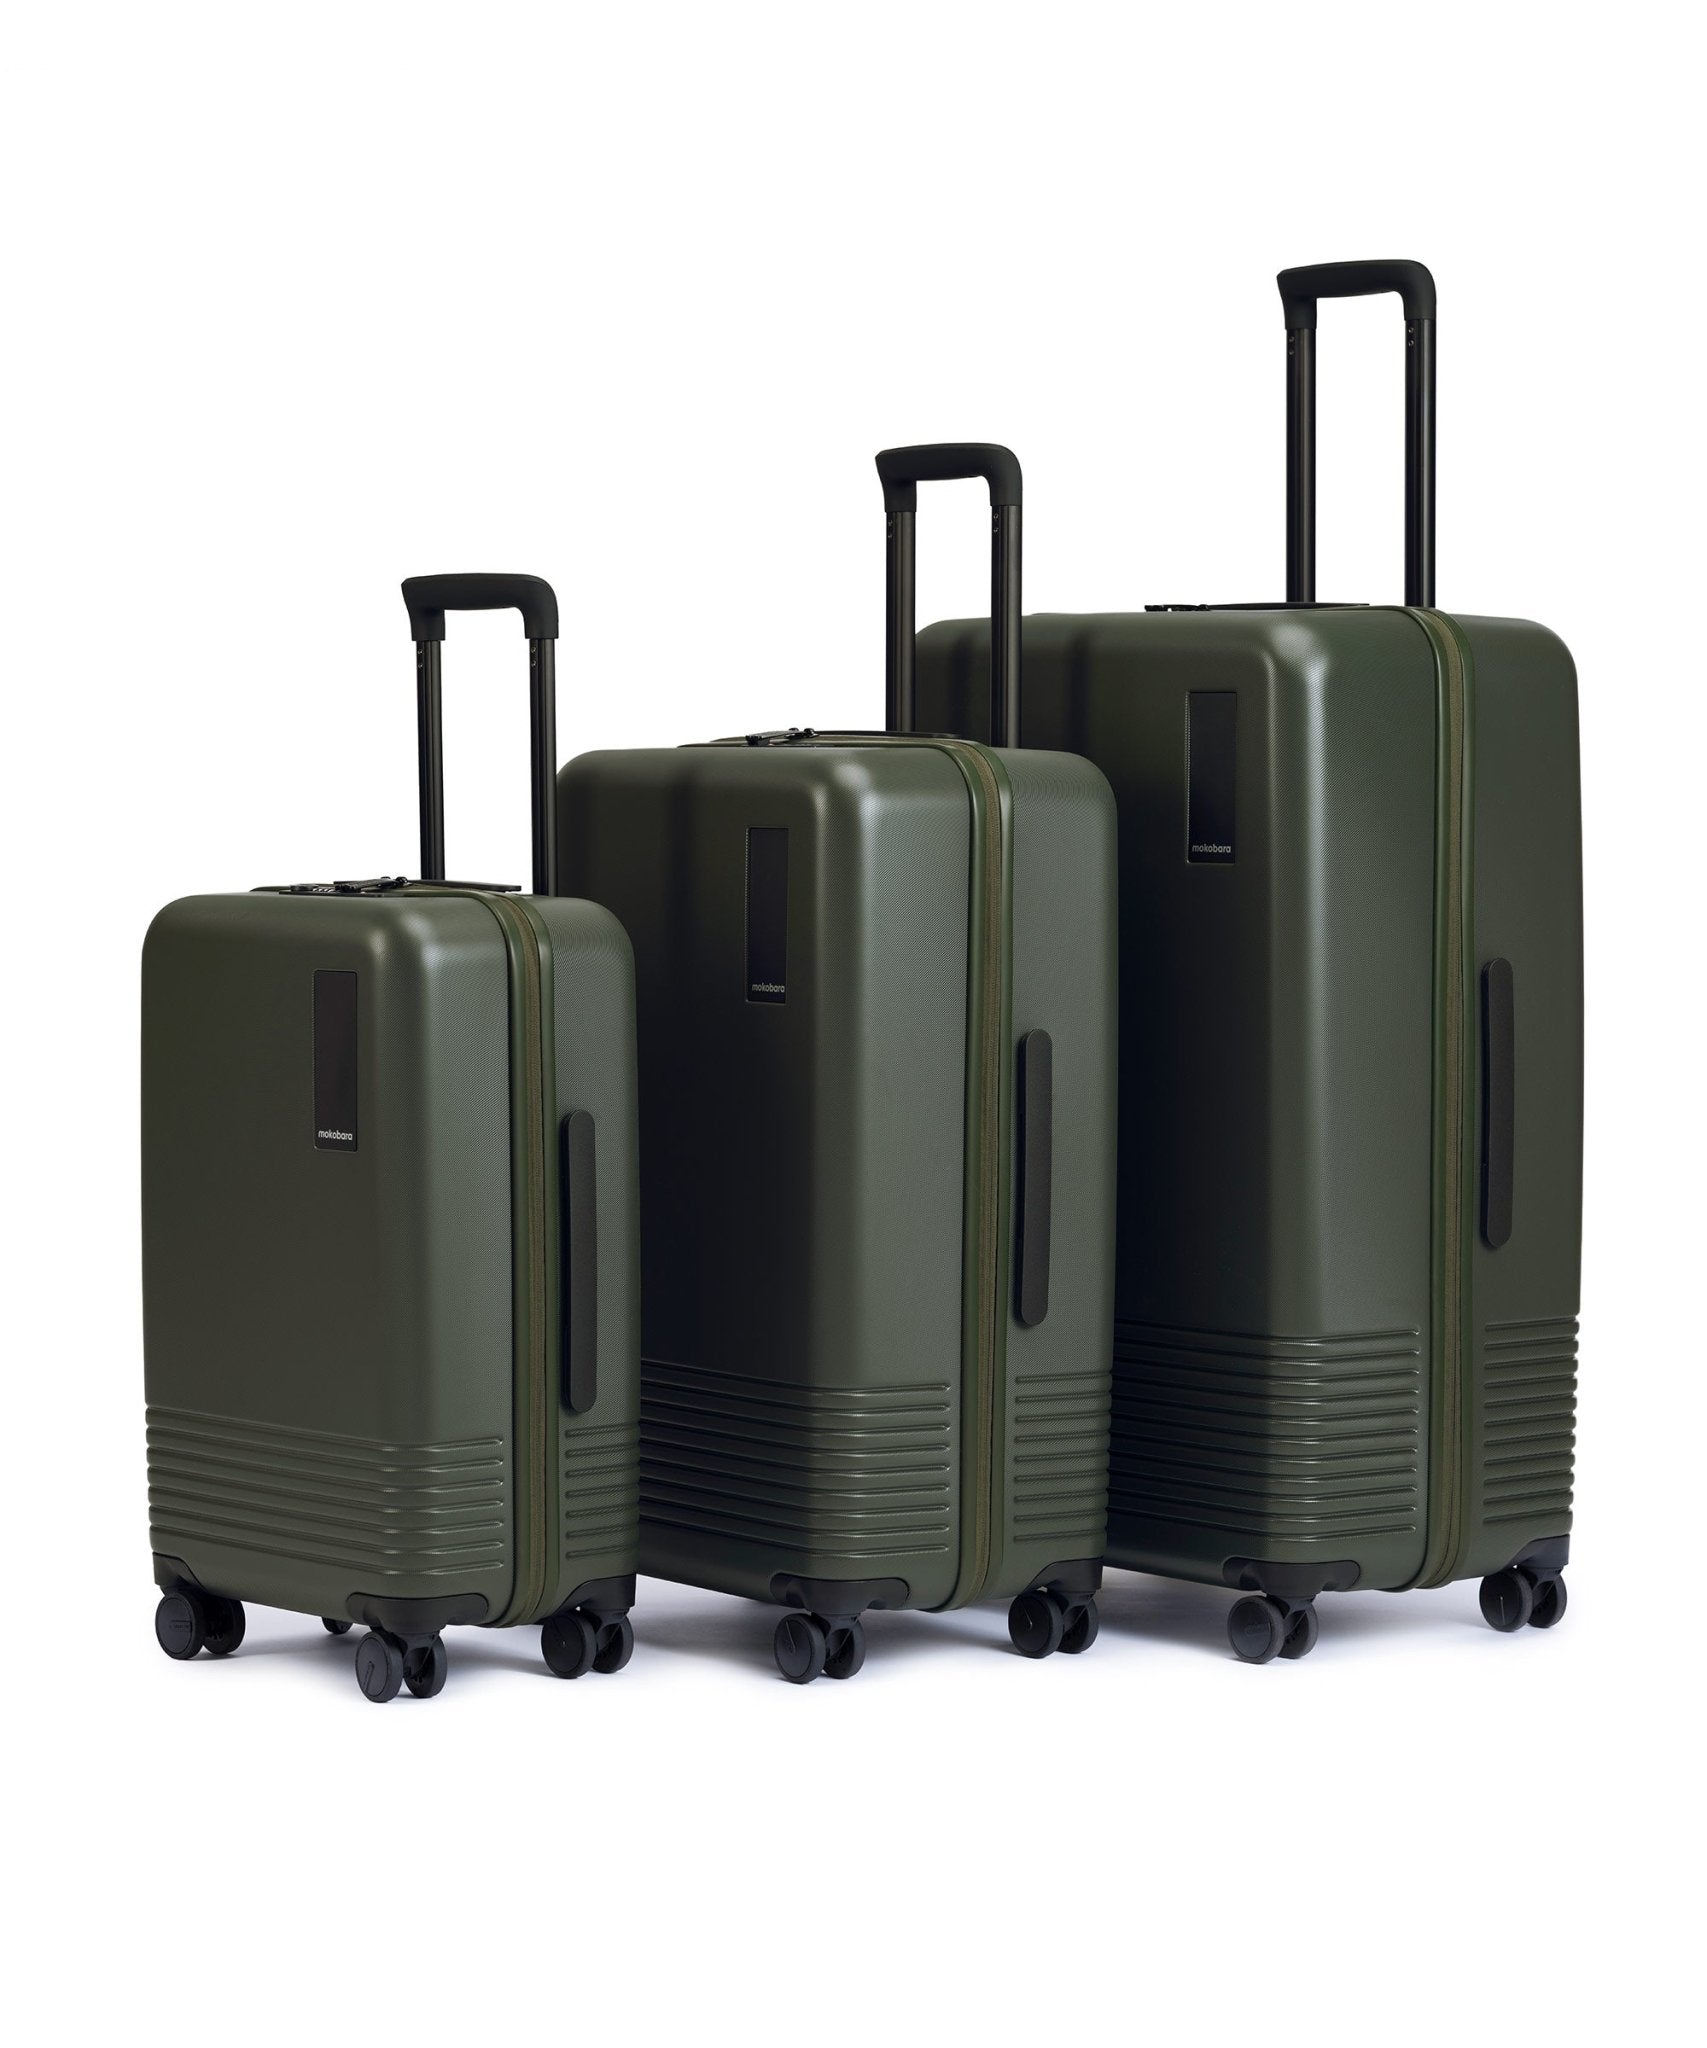 The Set of 3 Luggage